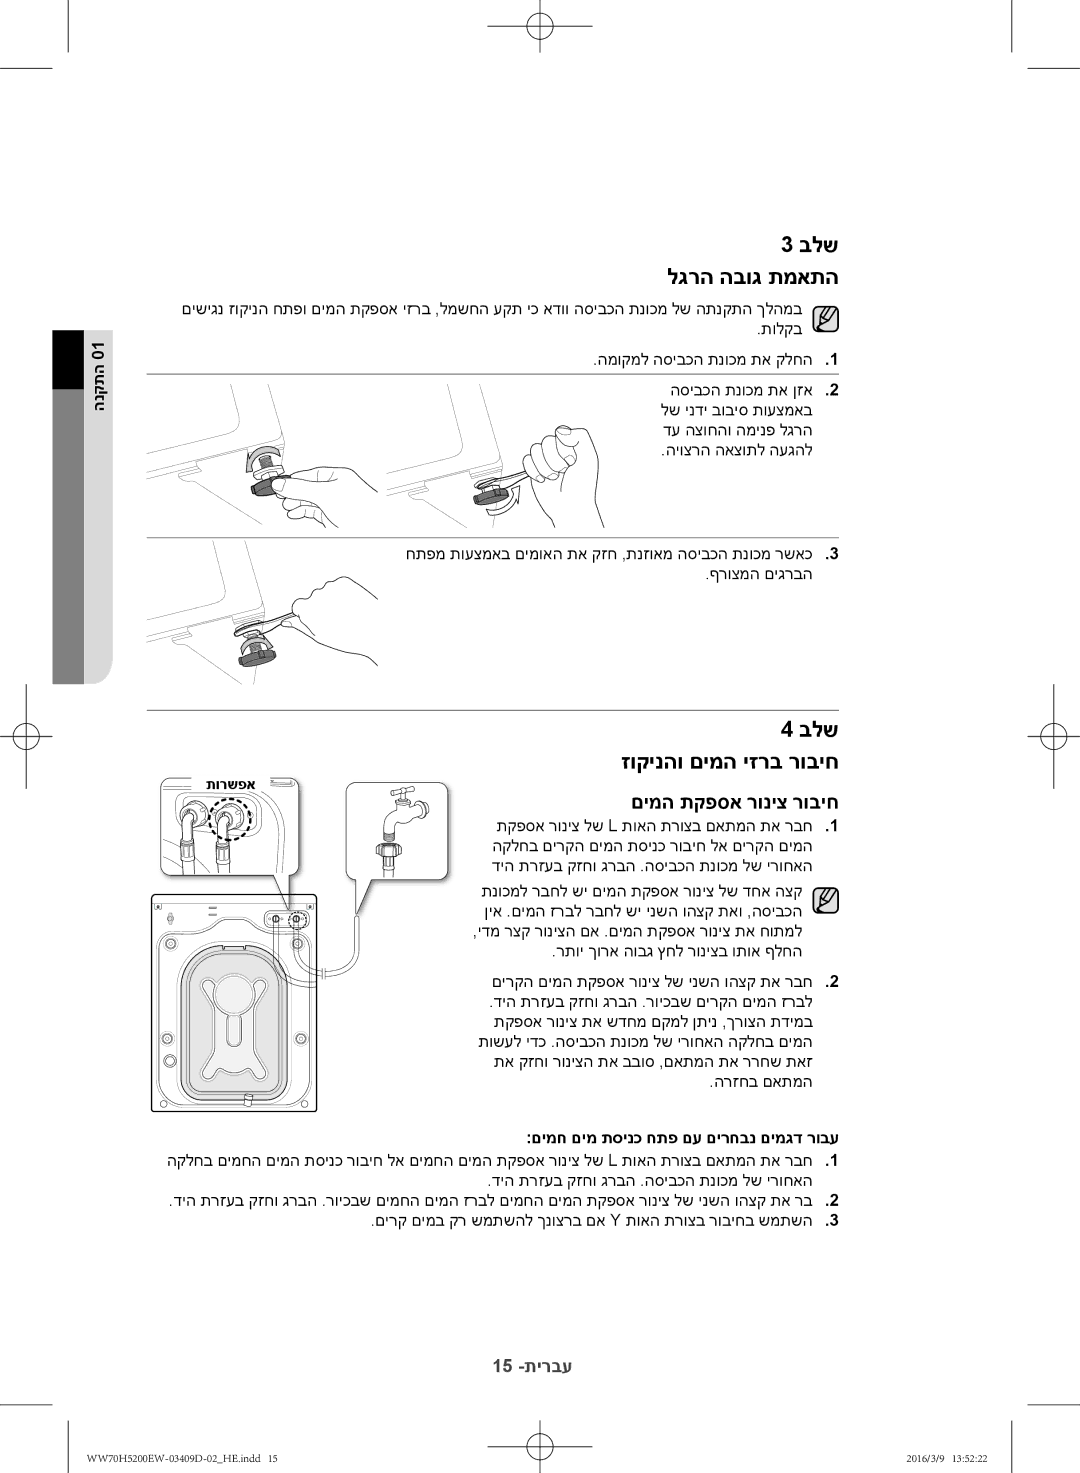 Samsung WW70H5200EW/KJ manual בלש לגרה הבוג תמאתה, בלש זוקינהו םימה יזרב רוביח, םימח םימ תסינכ חתפ םע םירחבנ םימגד רובע 